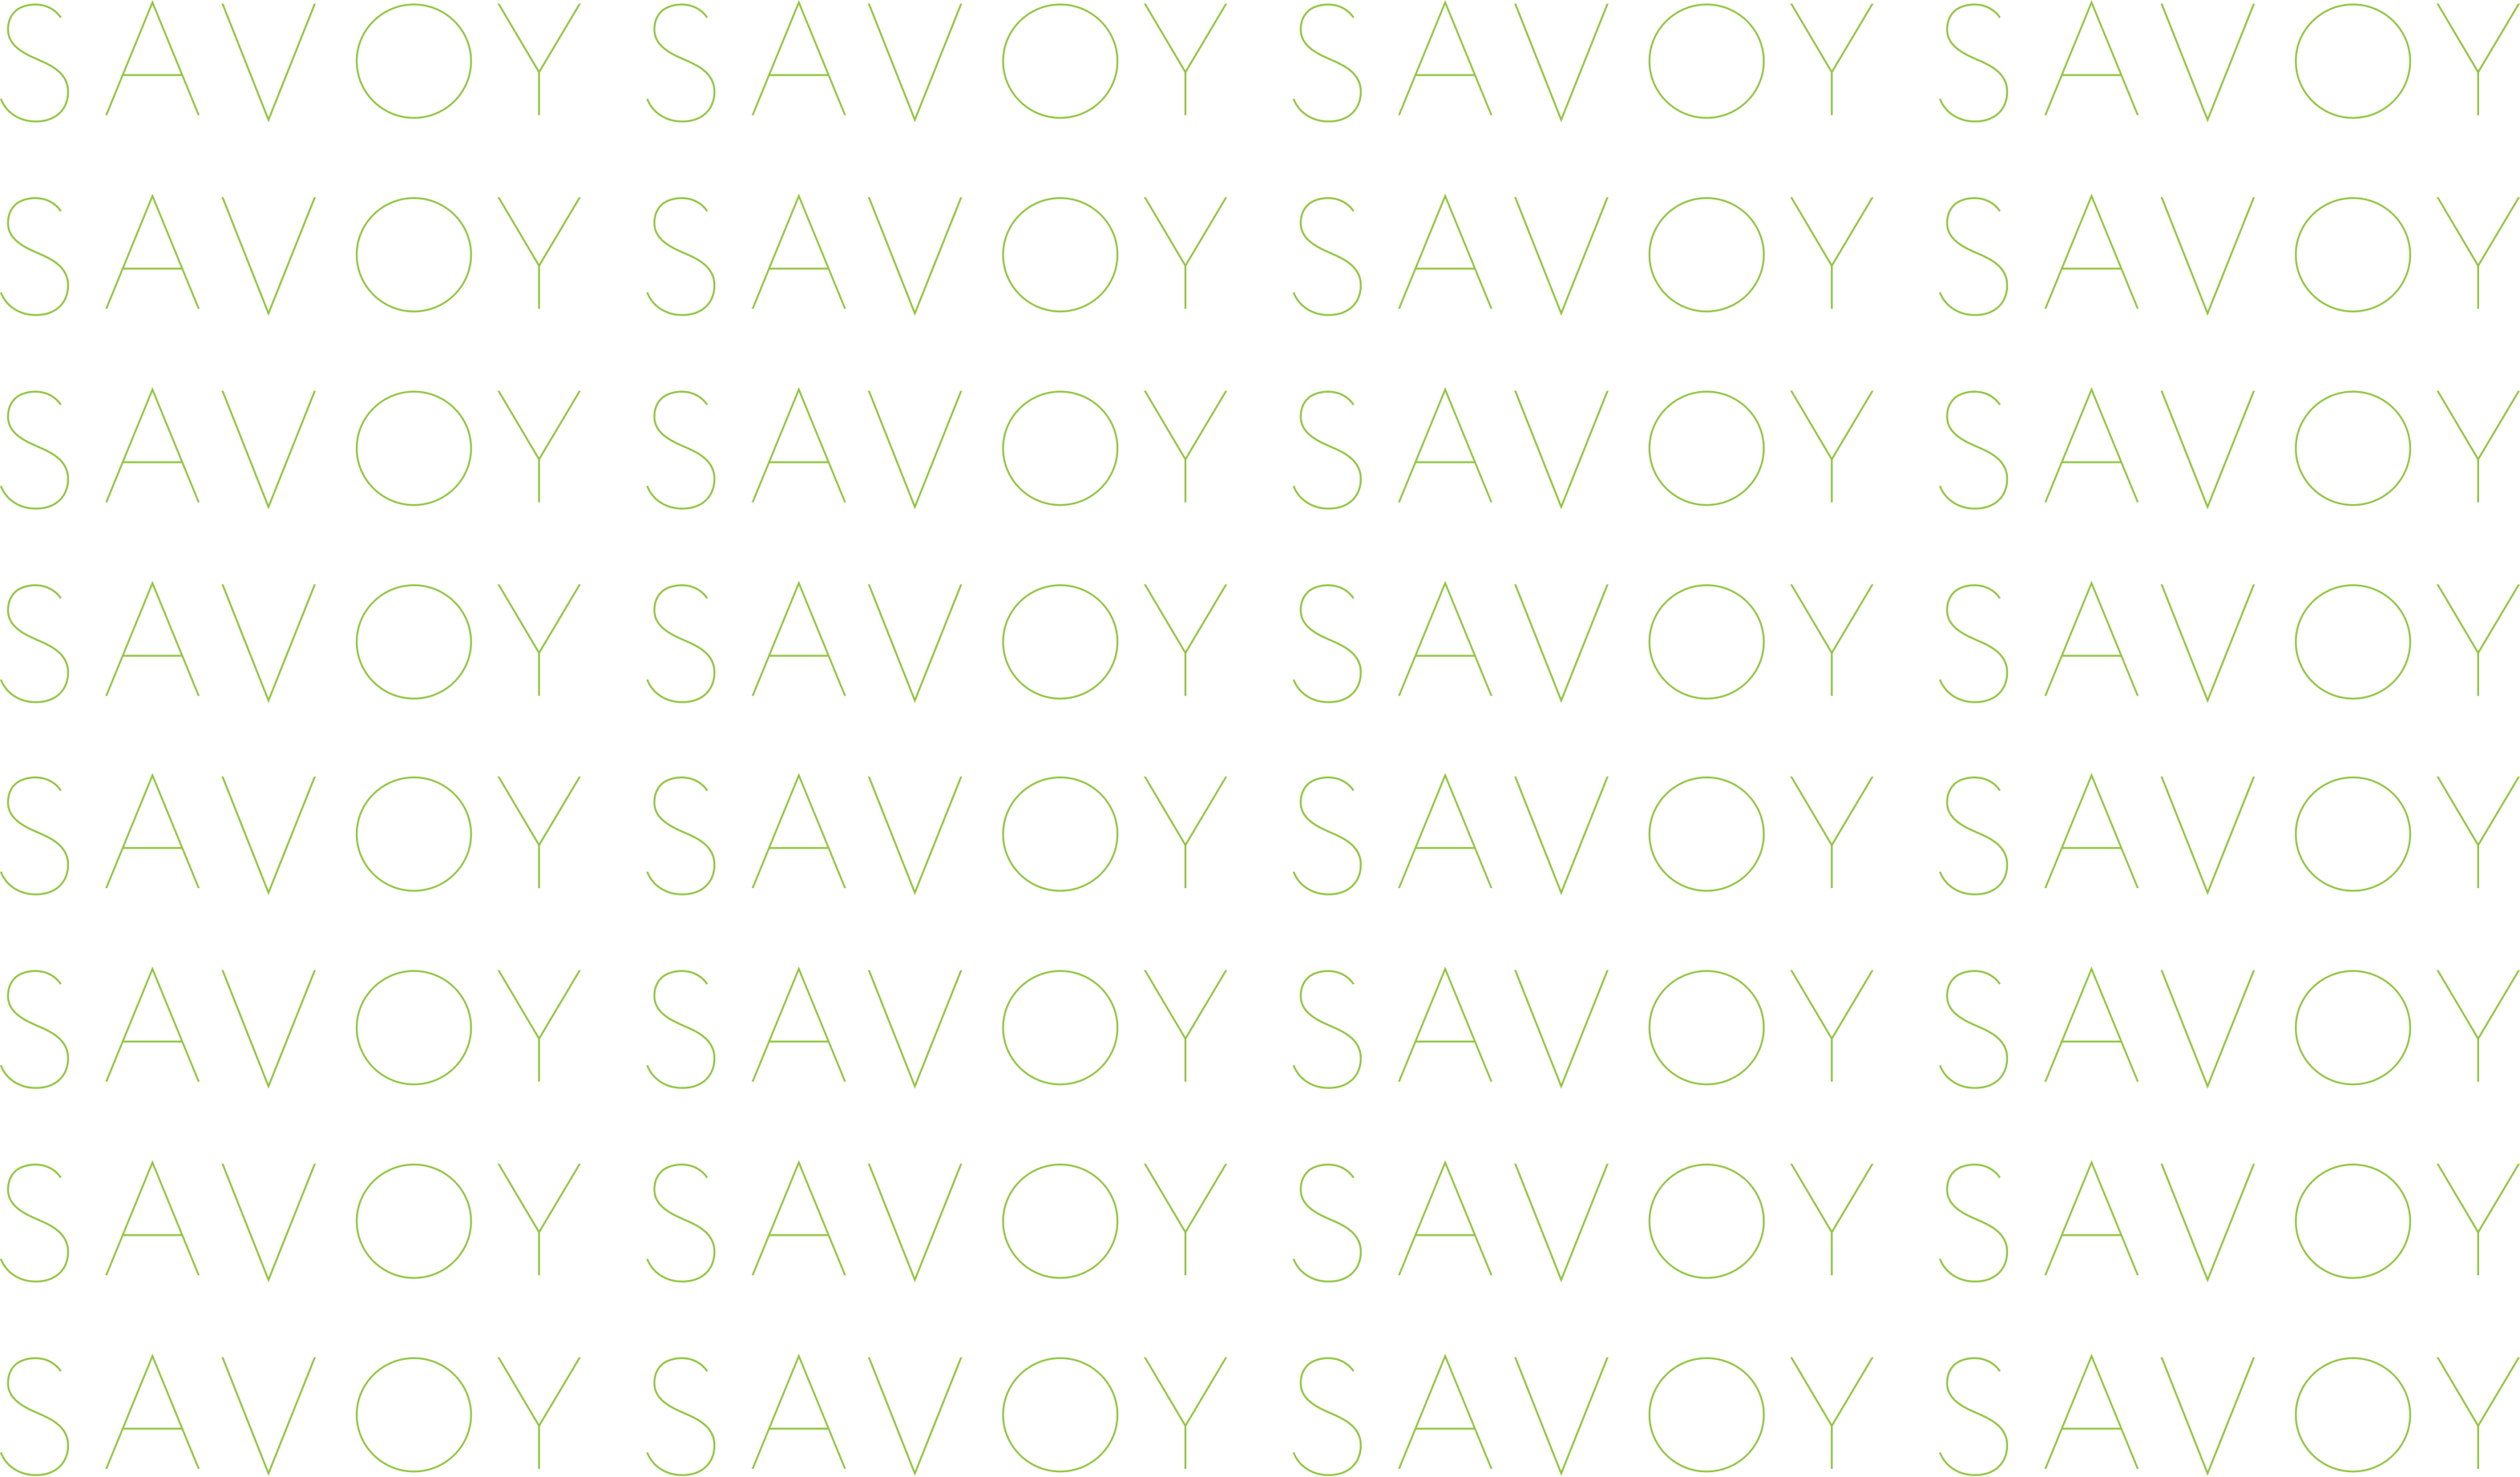 The Savoy Branding block